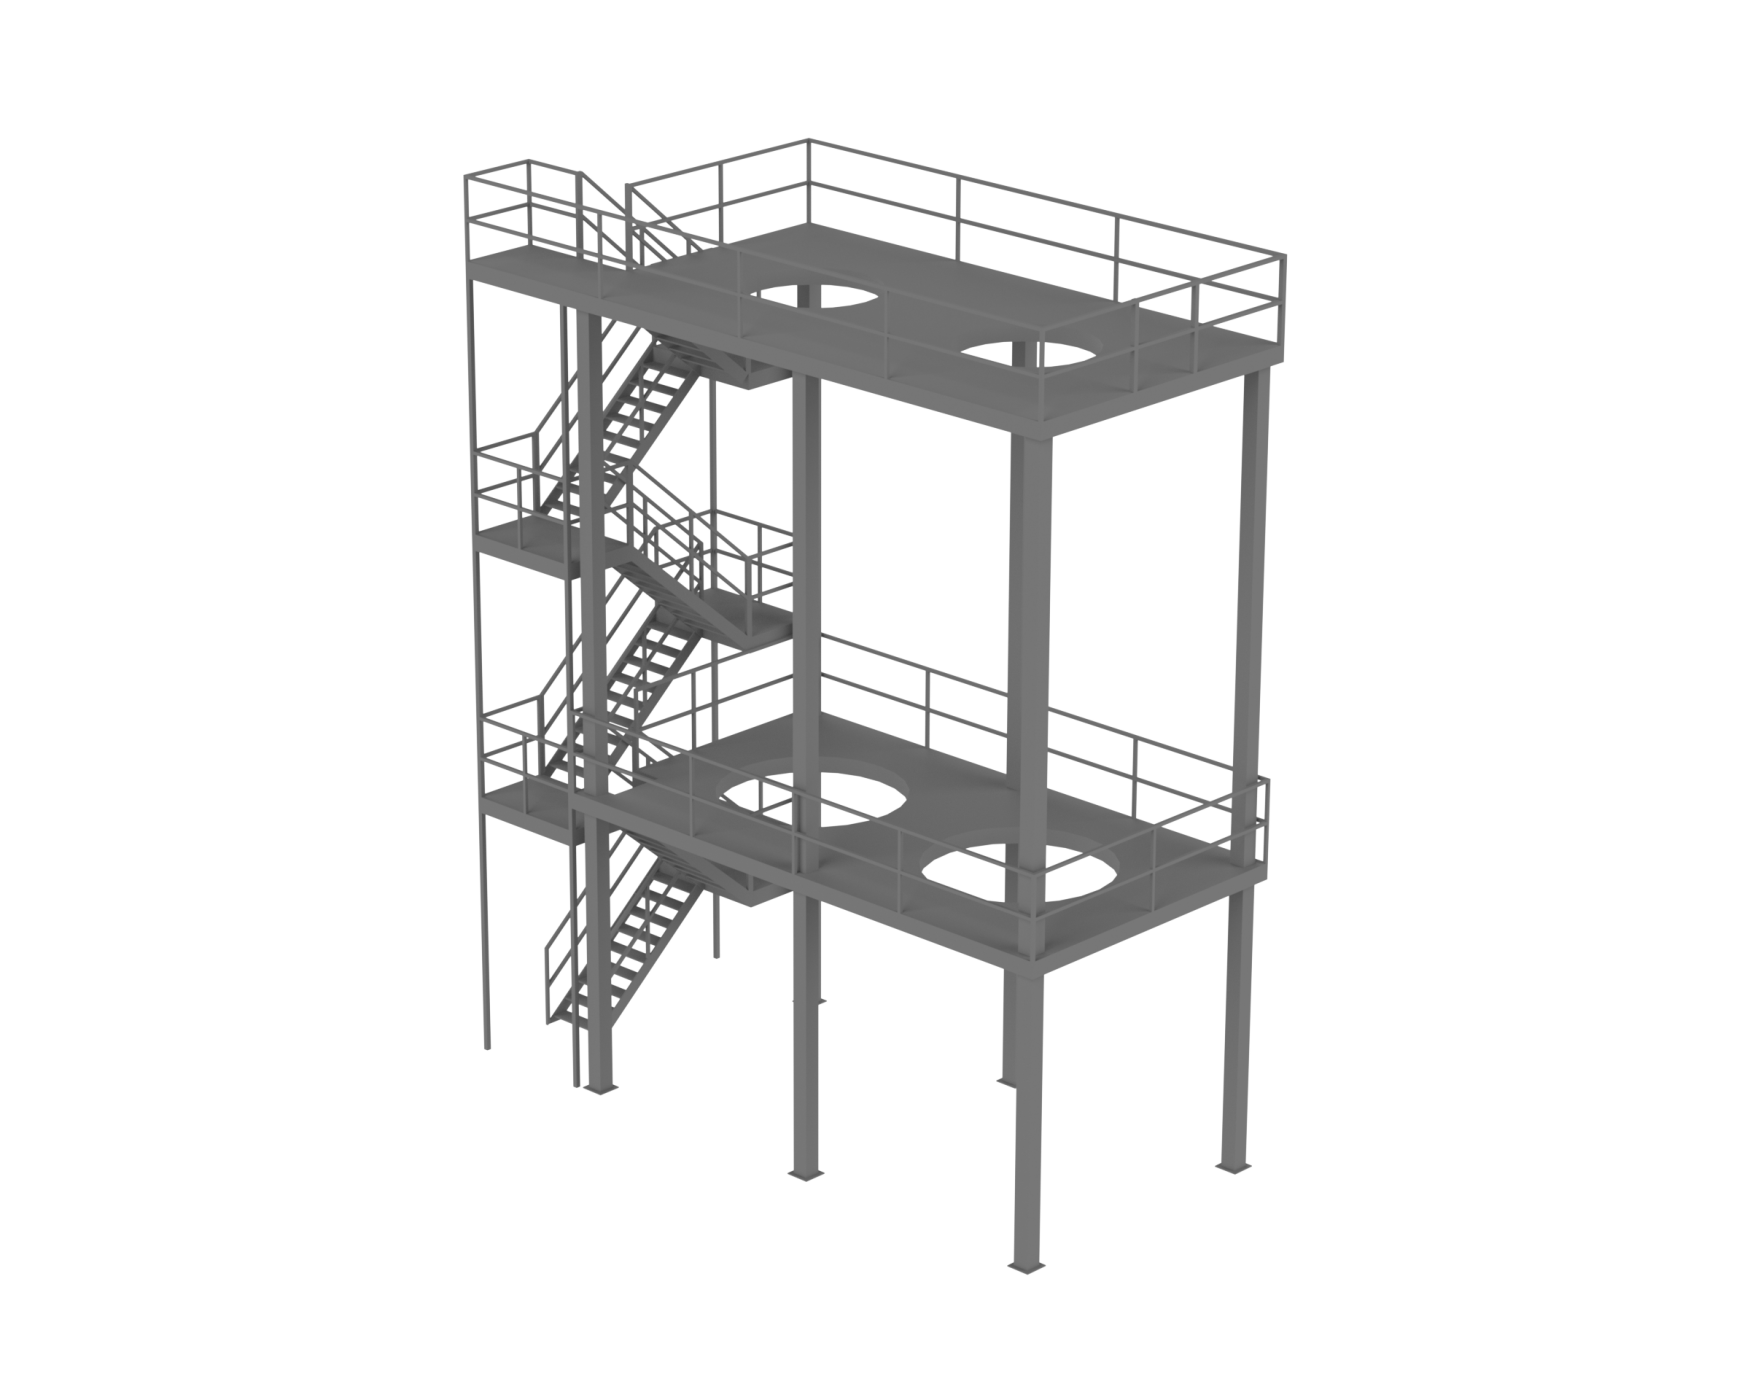 Stainless steel, carbon steel, galavanized platform, FEM calulations of steel platform